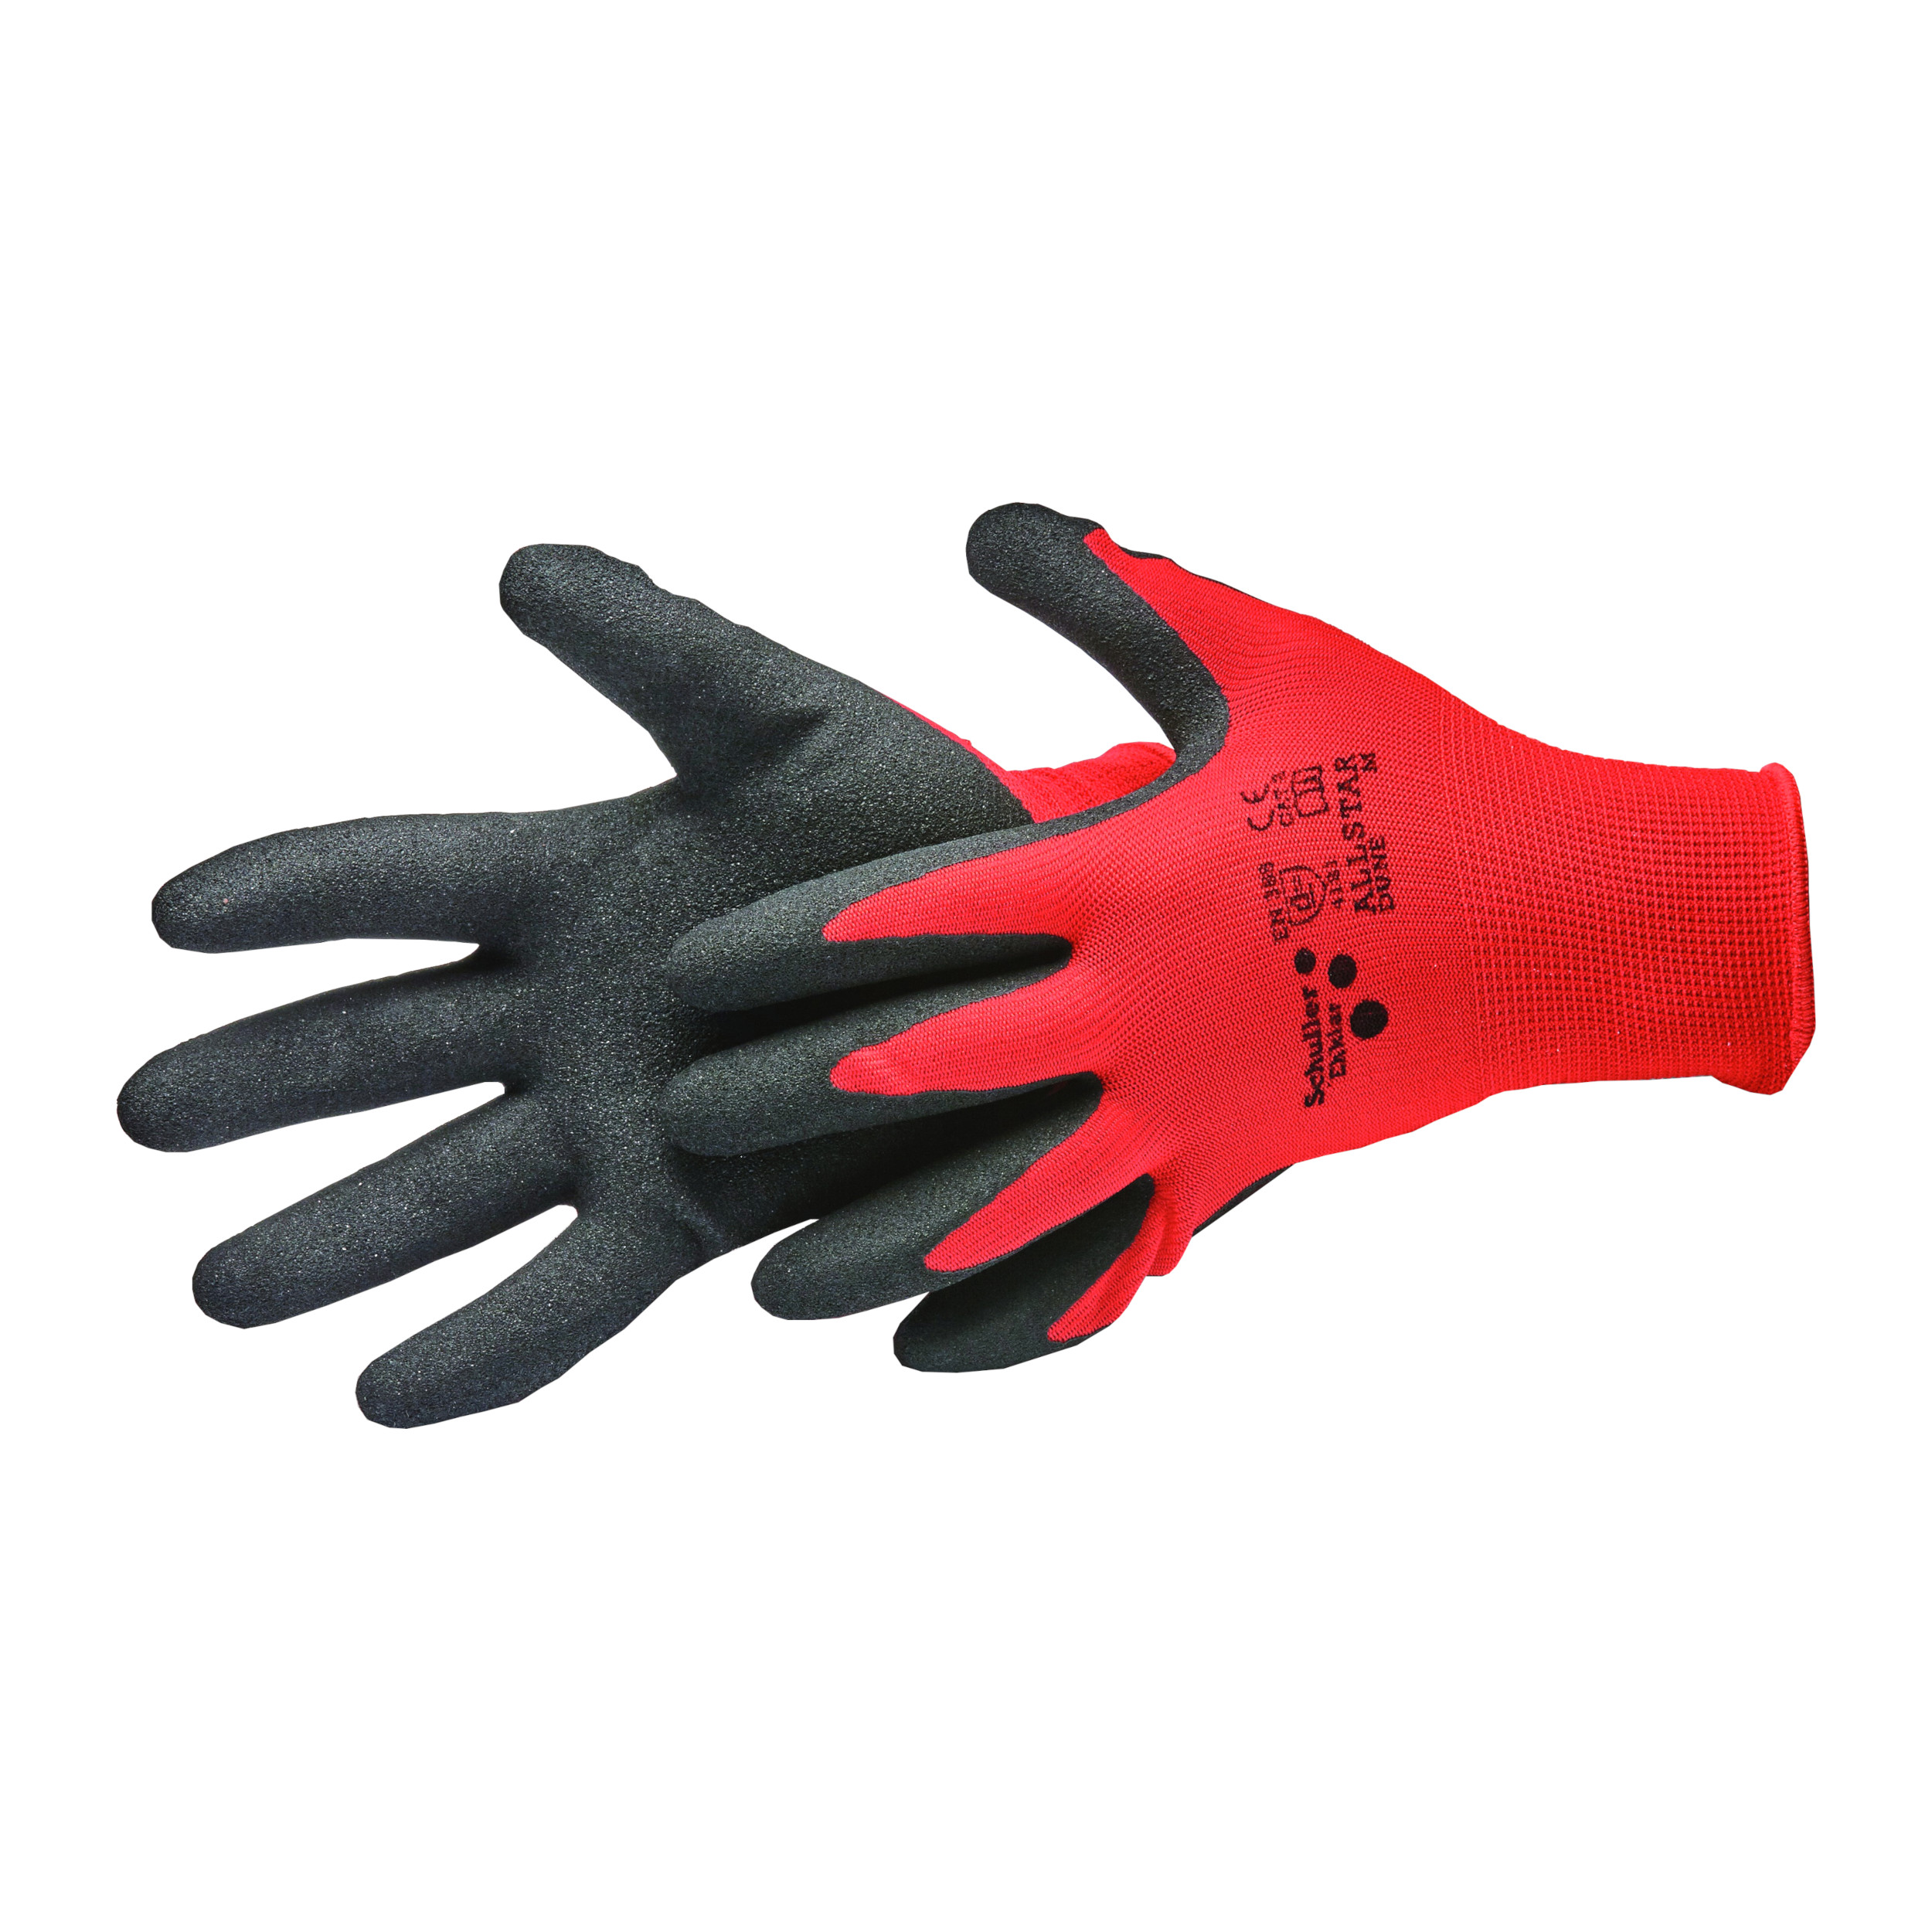 rukavice ALLSTAR, s nitrilovým potahem a úpletem, velikost 8 0.05 Kg TOP Sklad4 600118 247